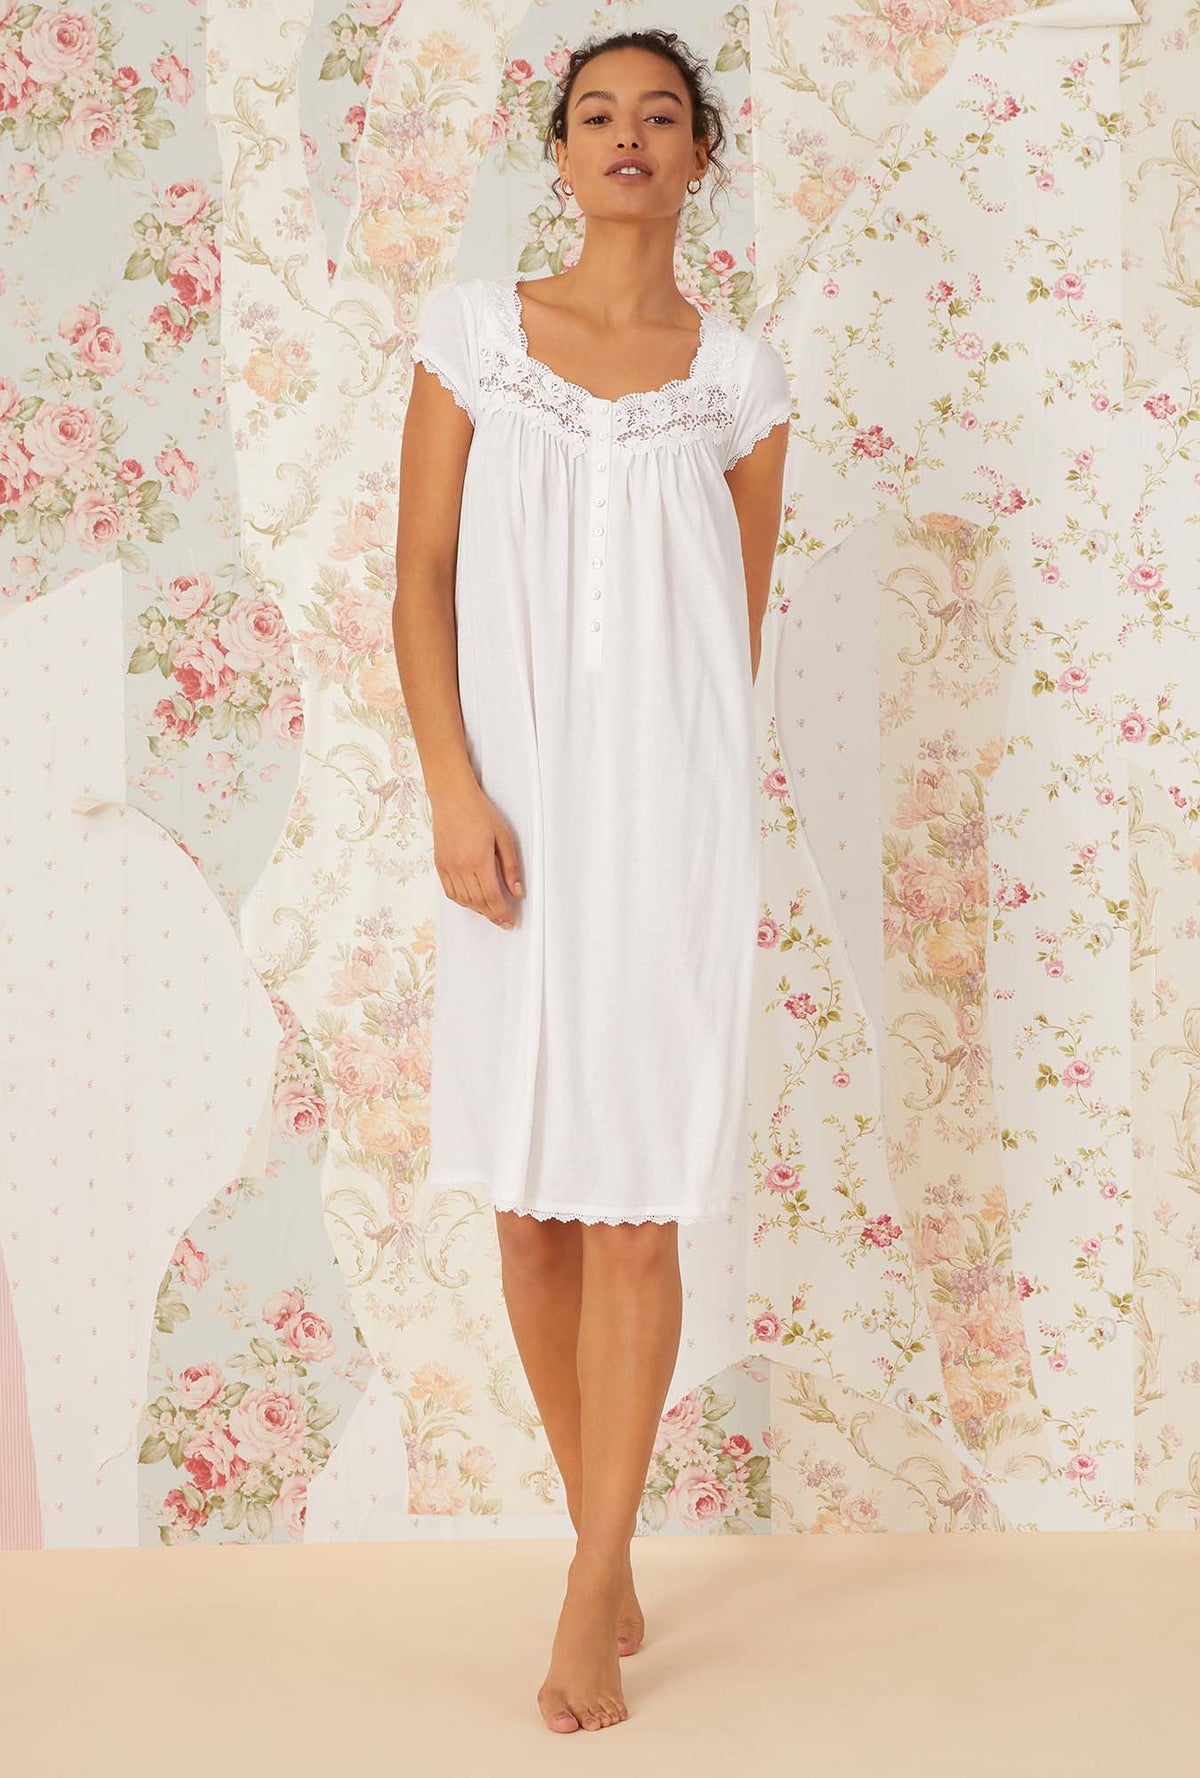 A lady wearing white villa blanca waltz knit nightgown.